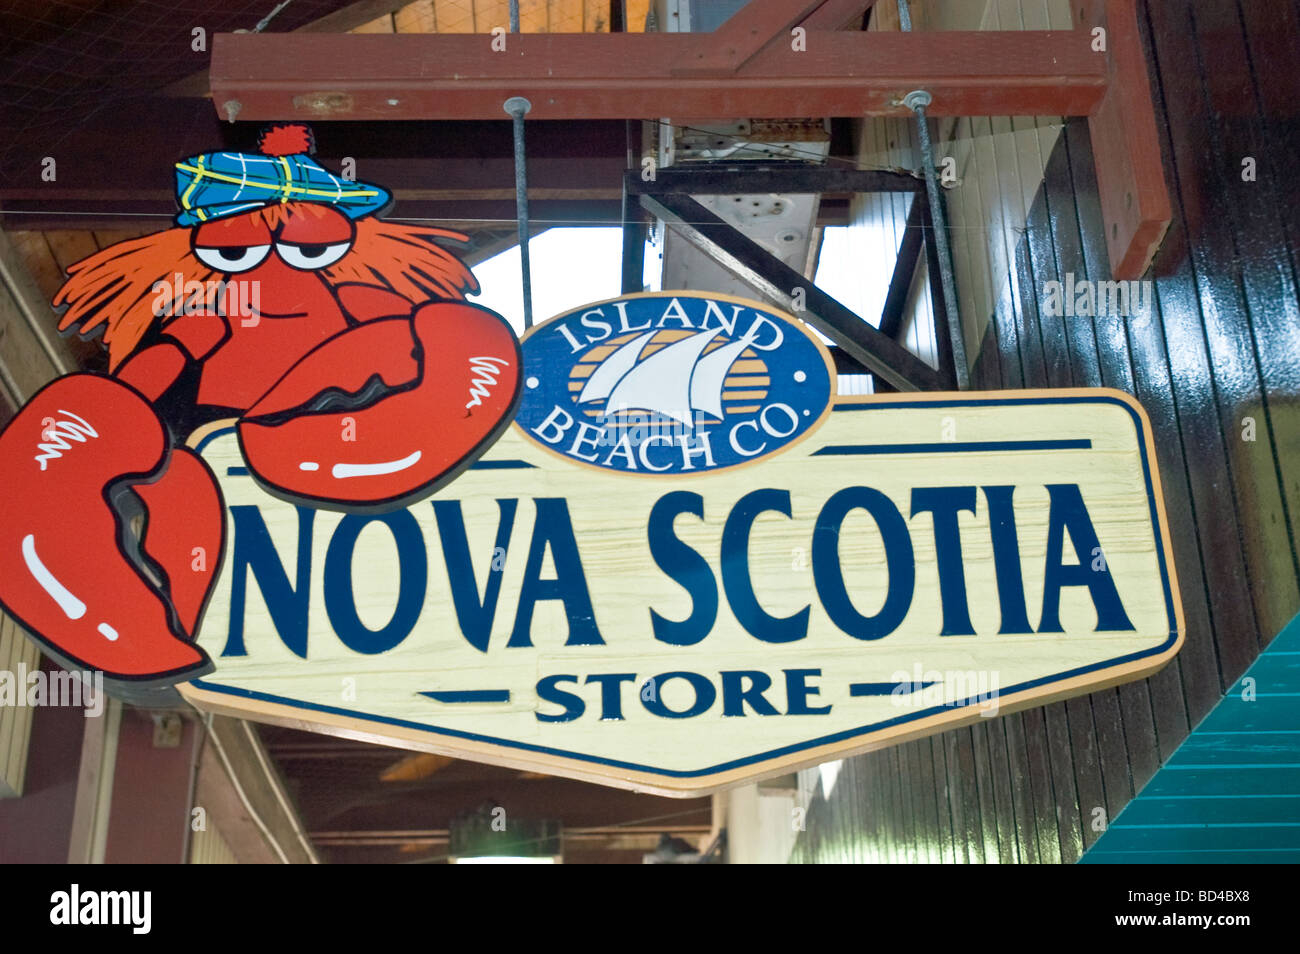 Island Beach Co Nova Scotia Store with red lobster, sigm Halifax Waterfront, Nova Scotia, Canada Stock Photo